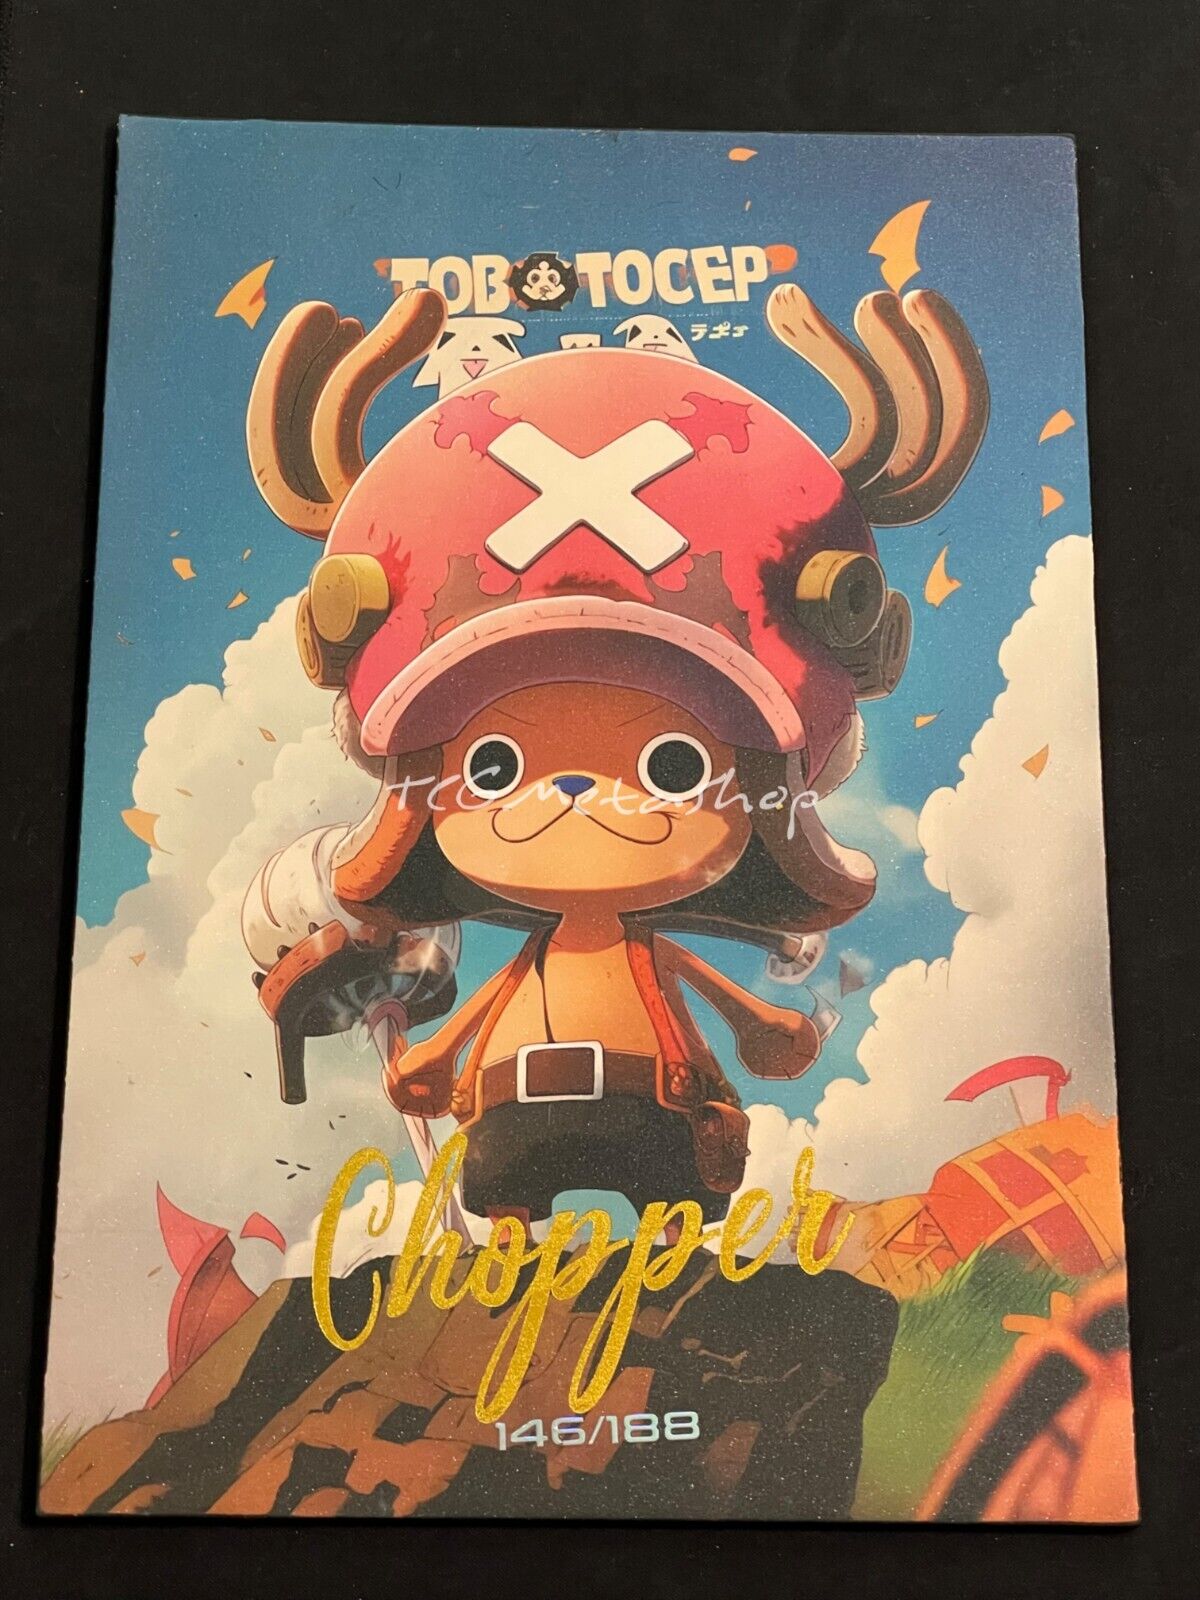 🔥 (146/188) Tony Chopper One Piece Goddess Story Anime Waifu A4 Card Seriel # 2